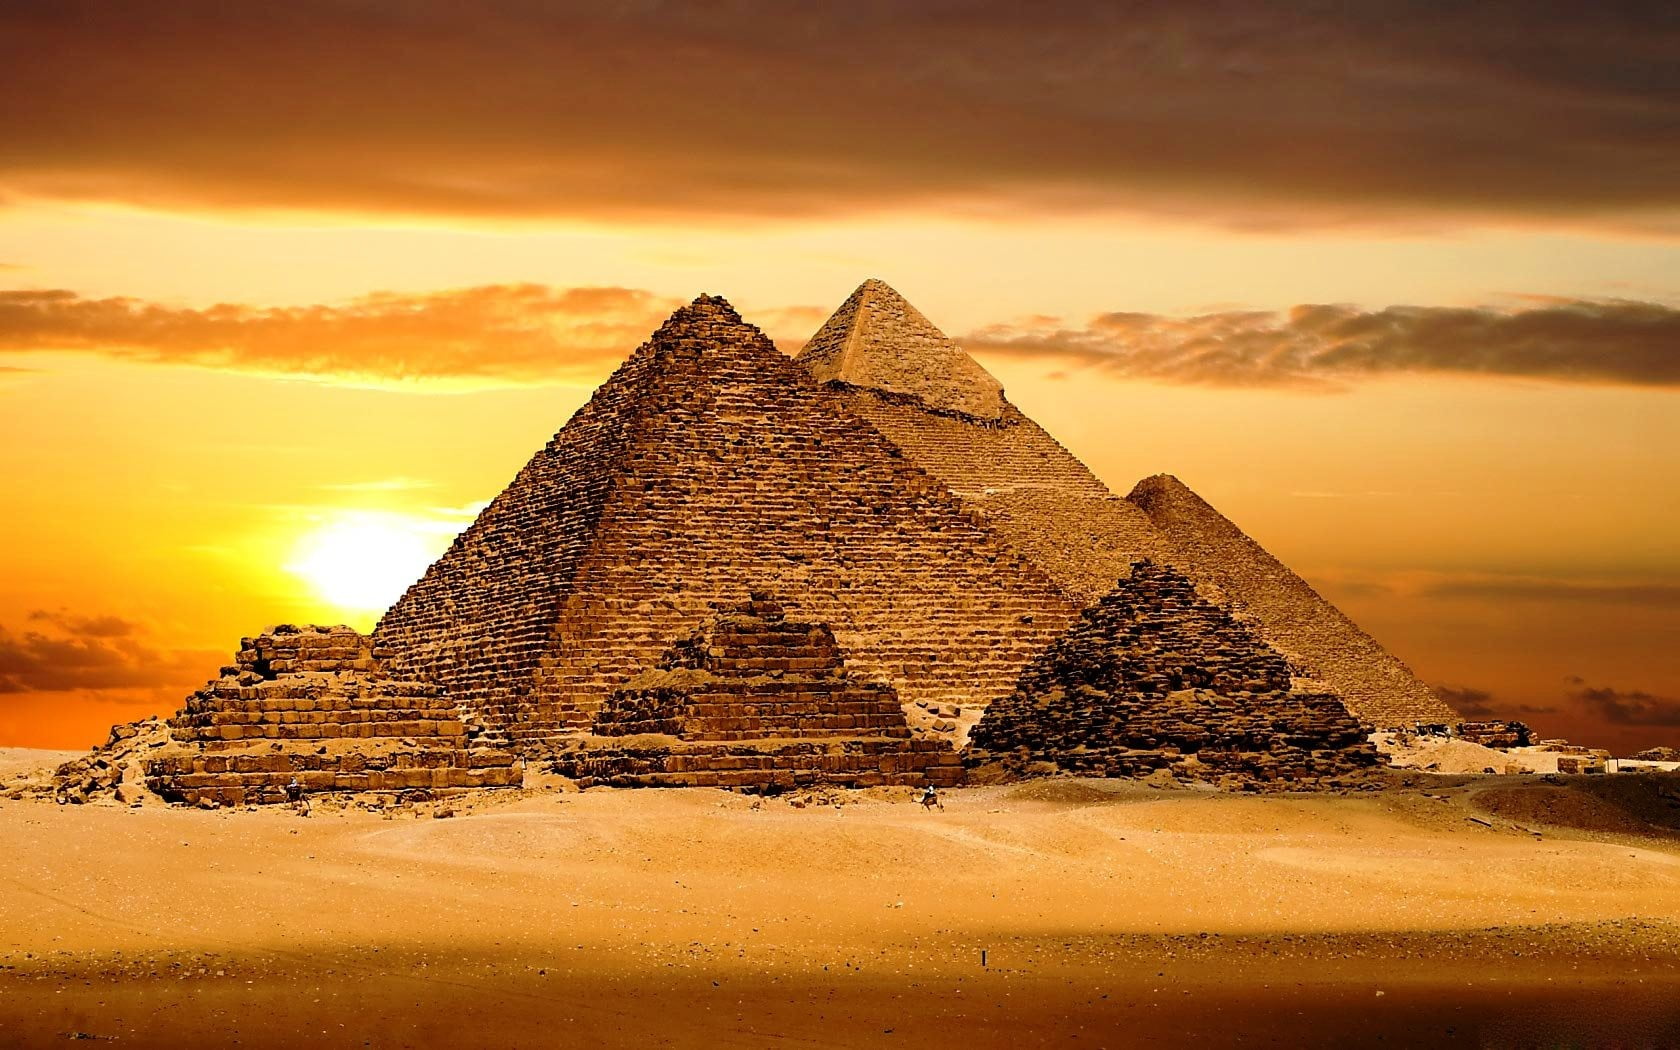 Pyramid of Giza, Egypt, sky, sunlight, ancient, history, the past